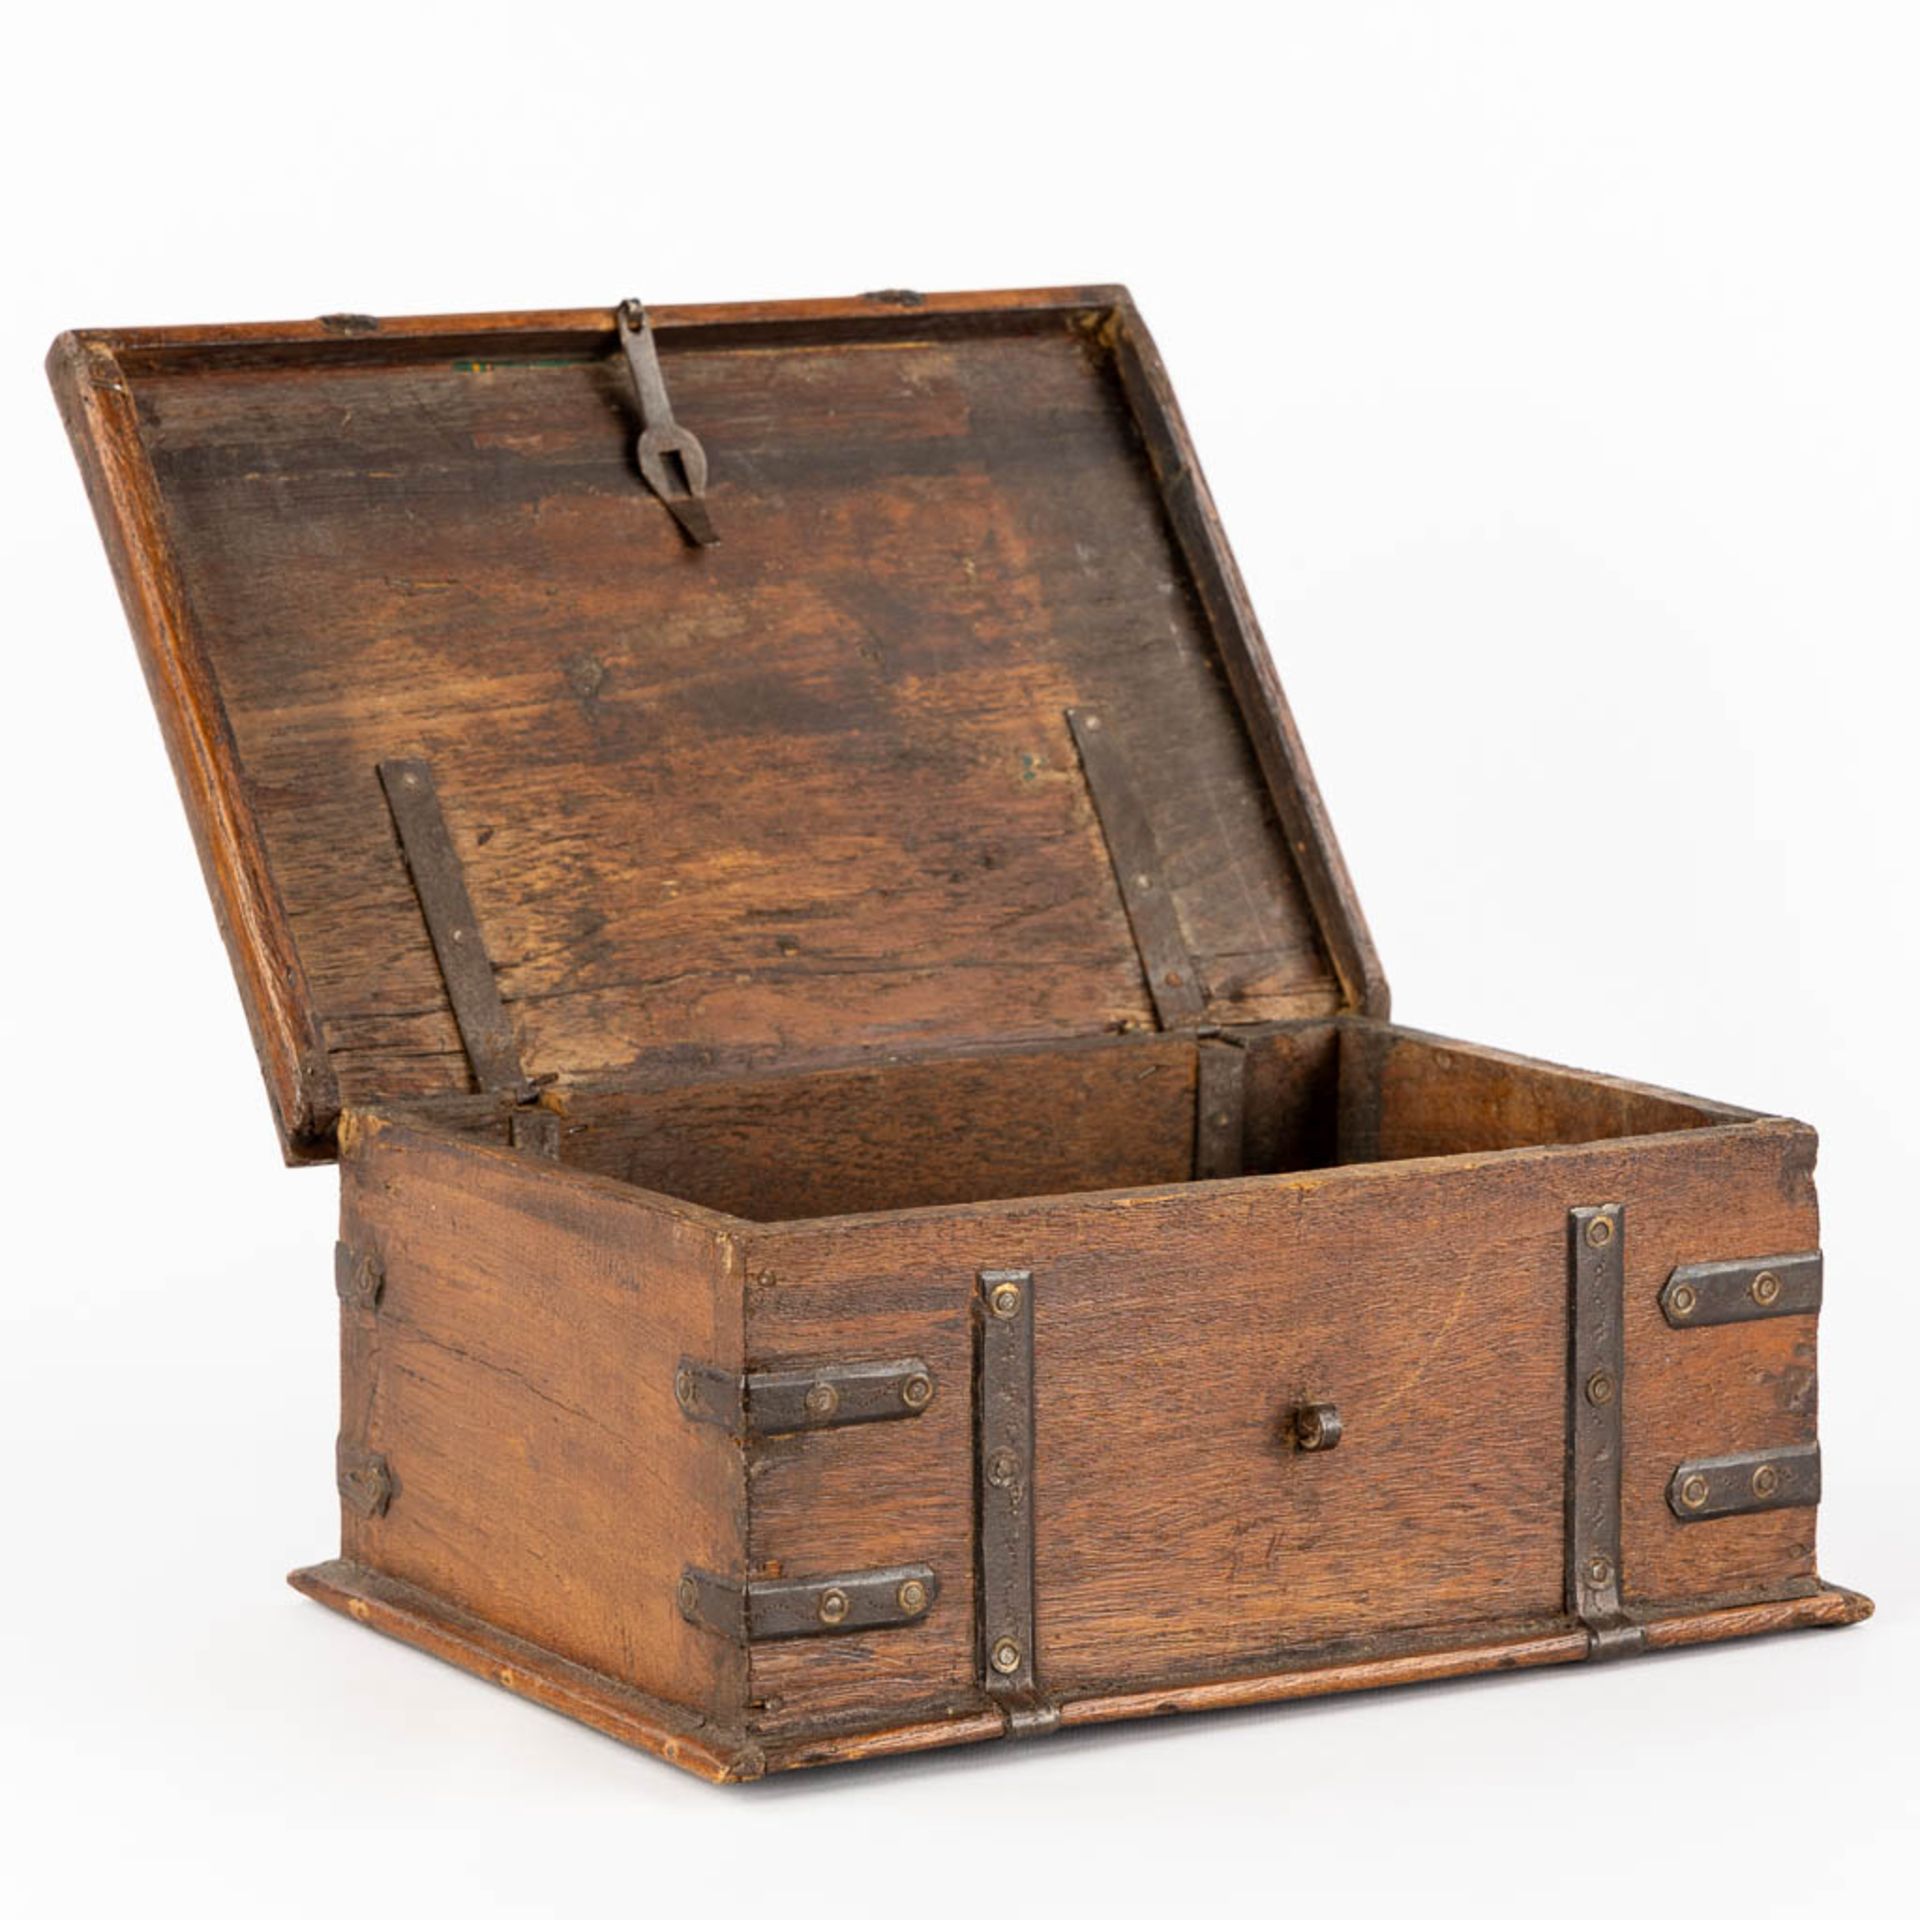 An antique money box or storage chest, oak and wrought iron, 19th C. (L:23 x W:31 x H:13 cm) - Bild 7 aus 13